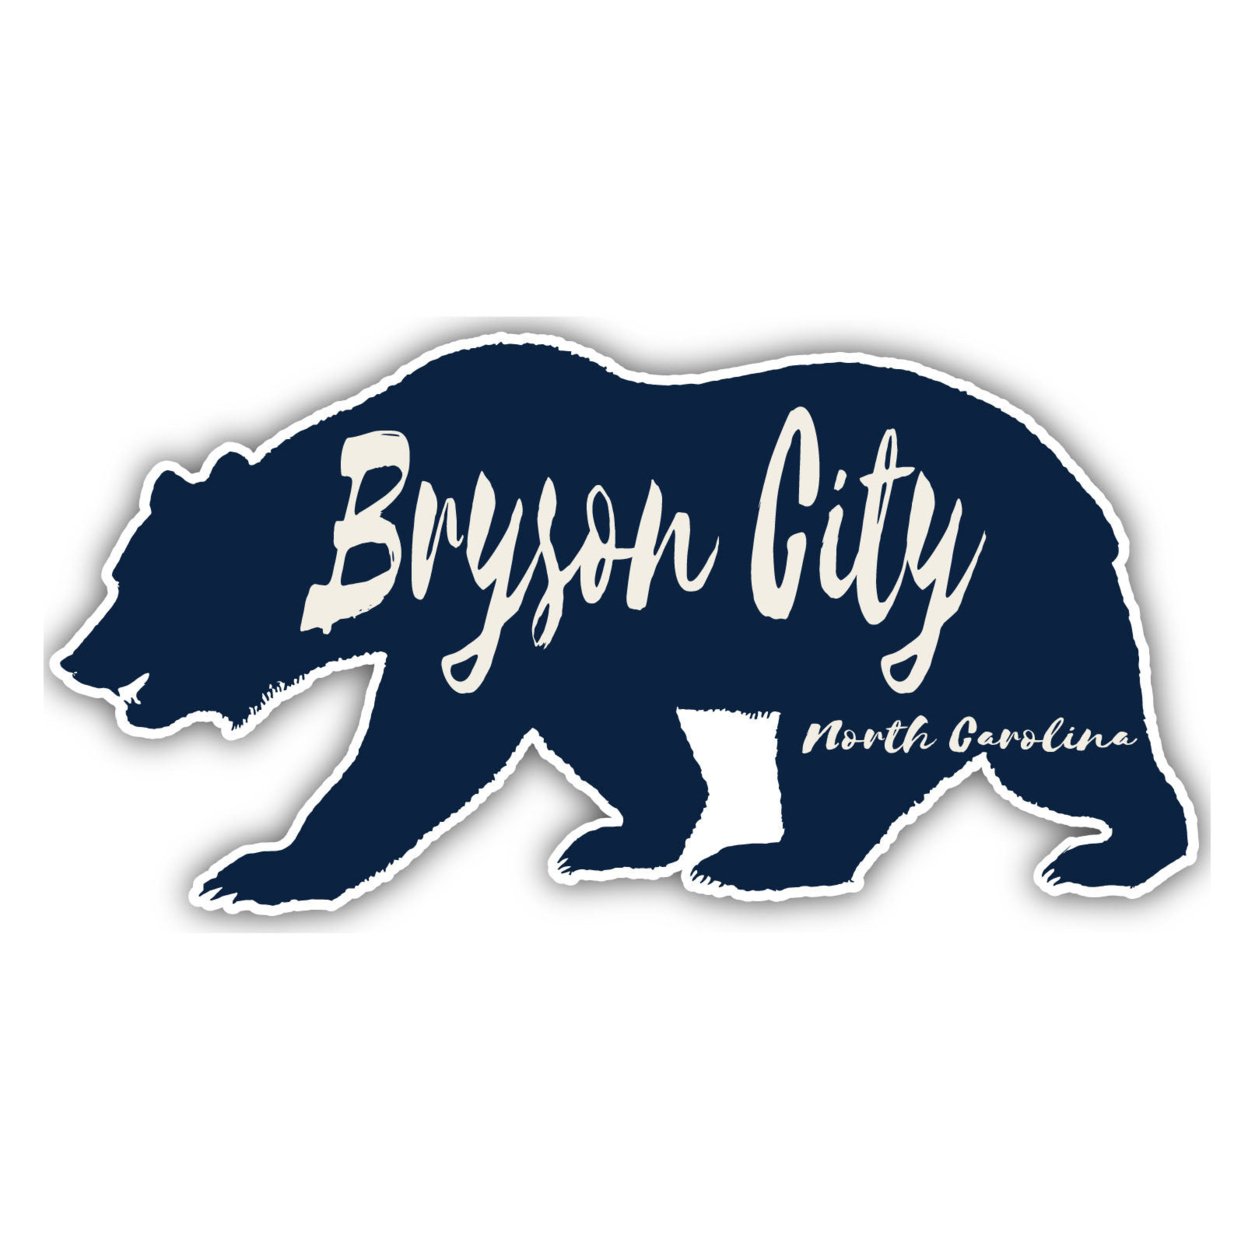 Bryson City North Carolina Souvenir Decorative Stickers (Choose Theme And Size) - 4-Pack, 12-Inch, Bear